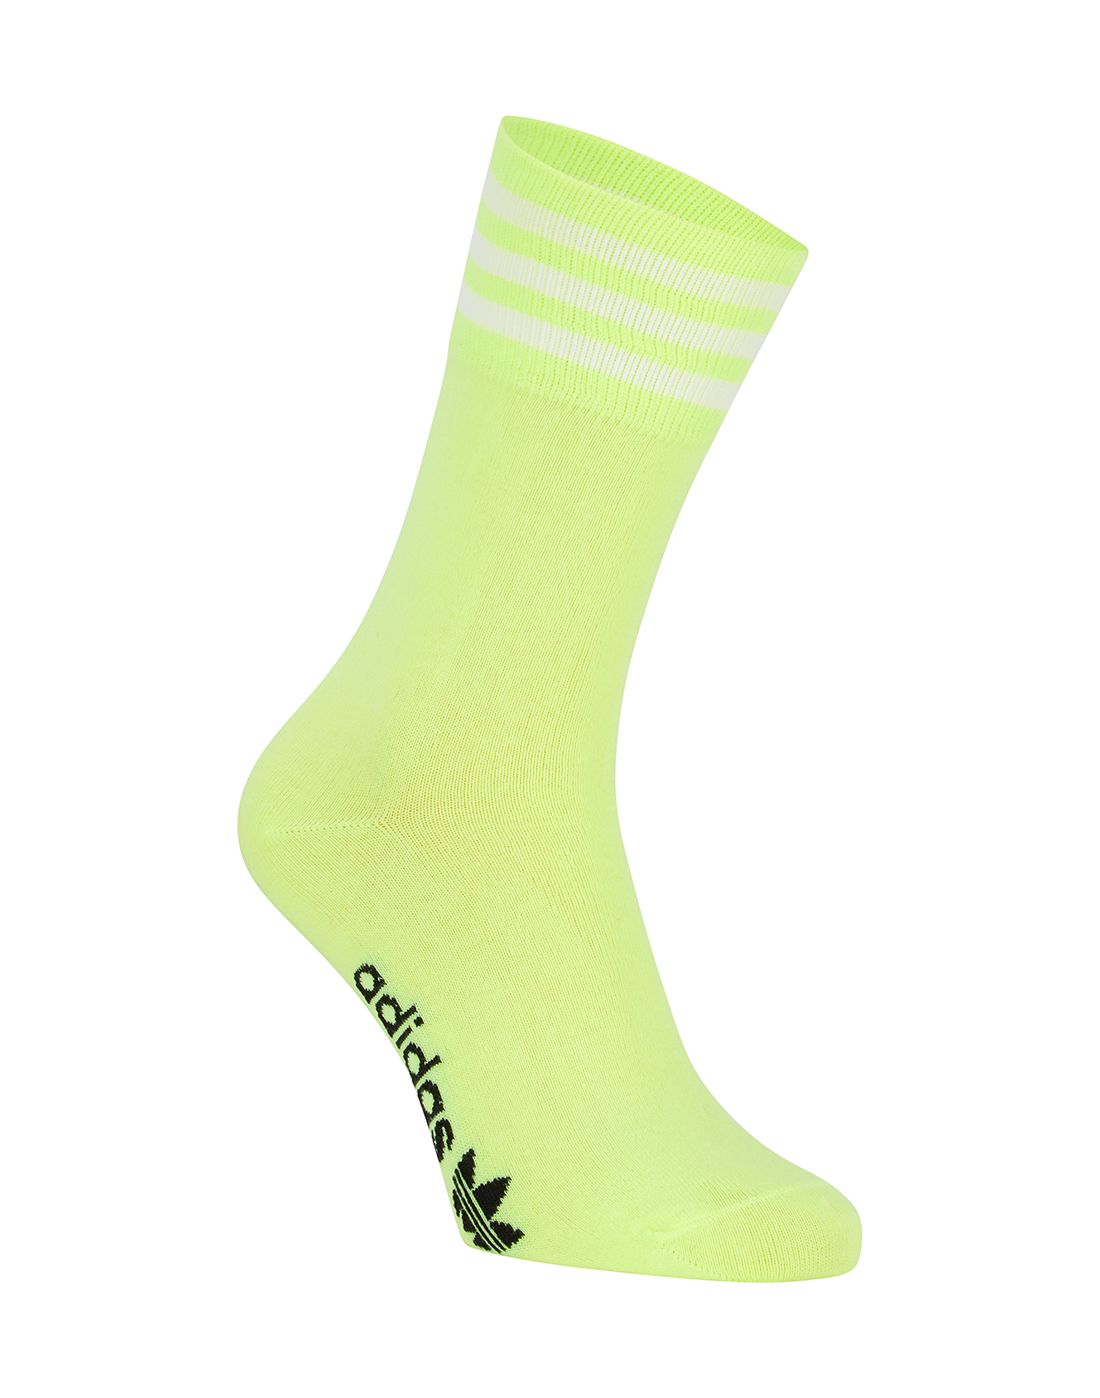 neon adidas socks